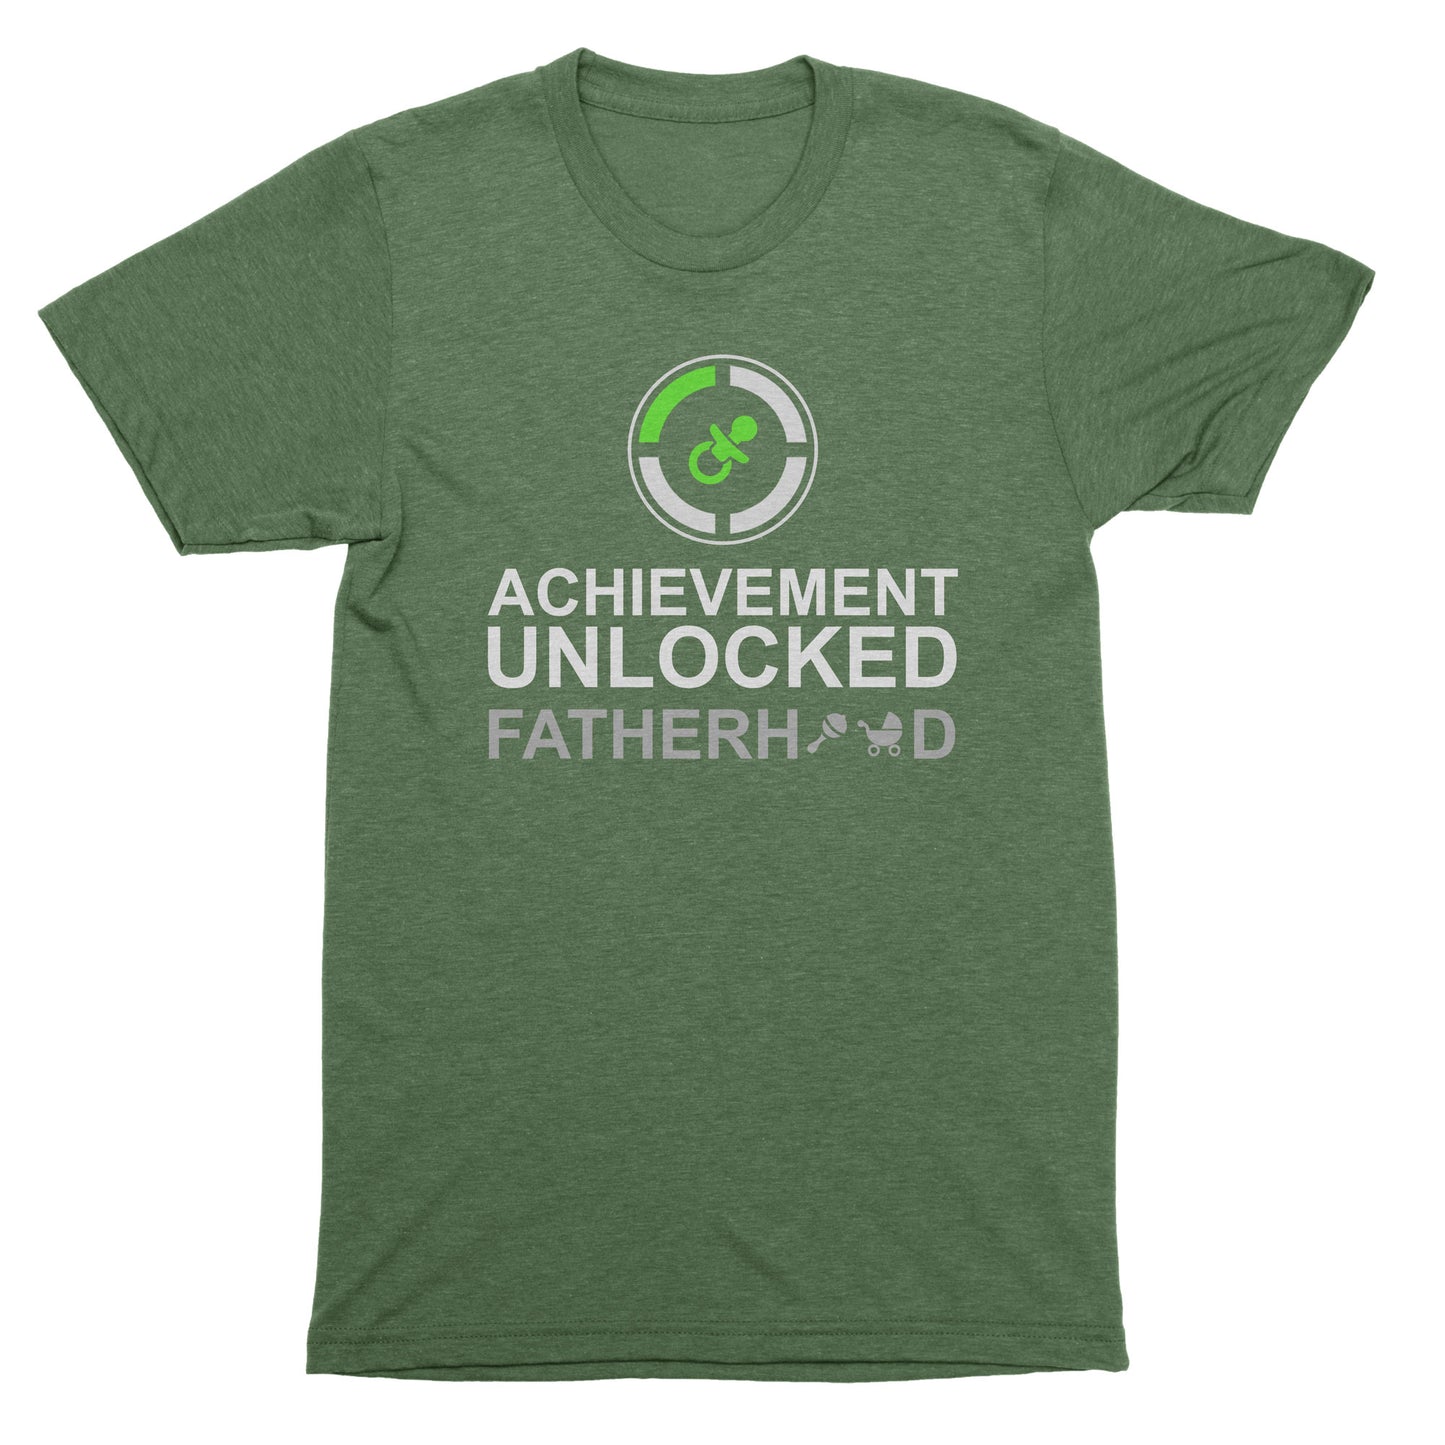 Achievement Unlocked - Fatherhood military green t-shirt